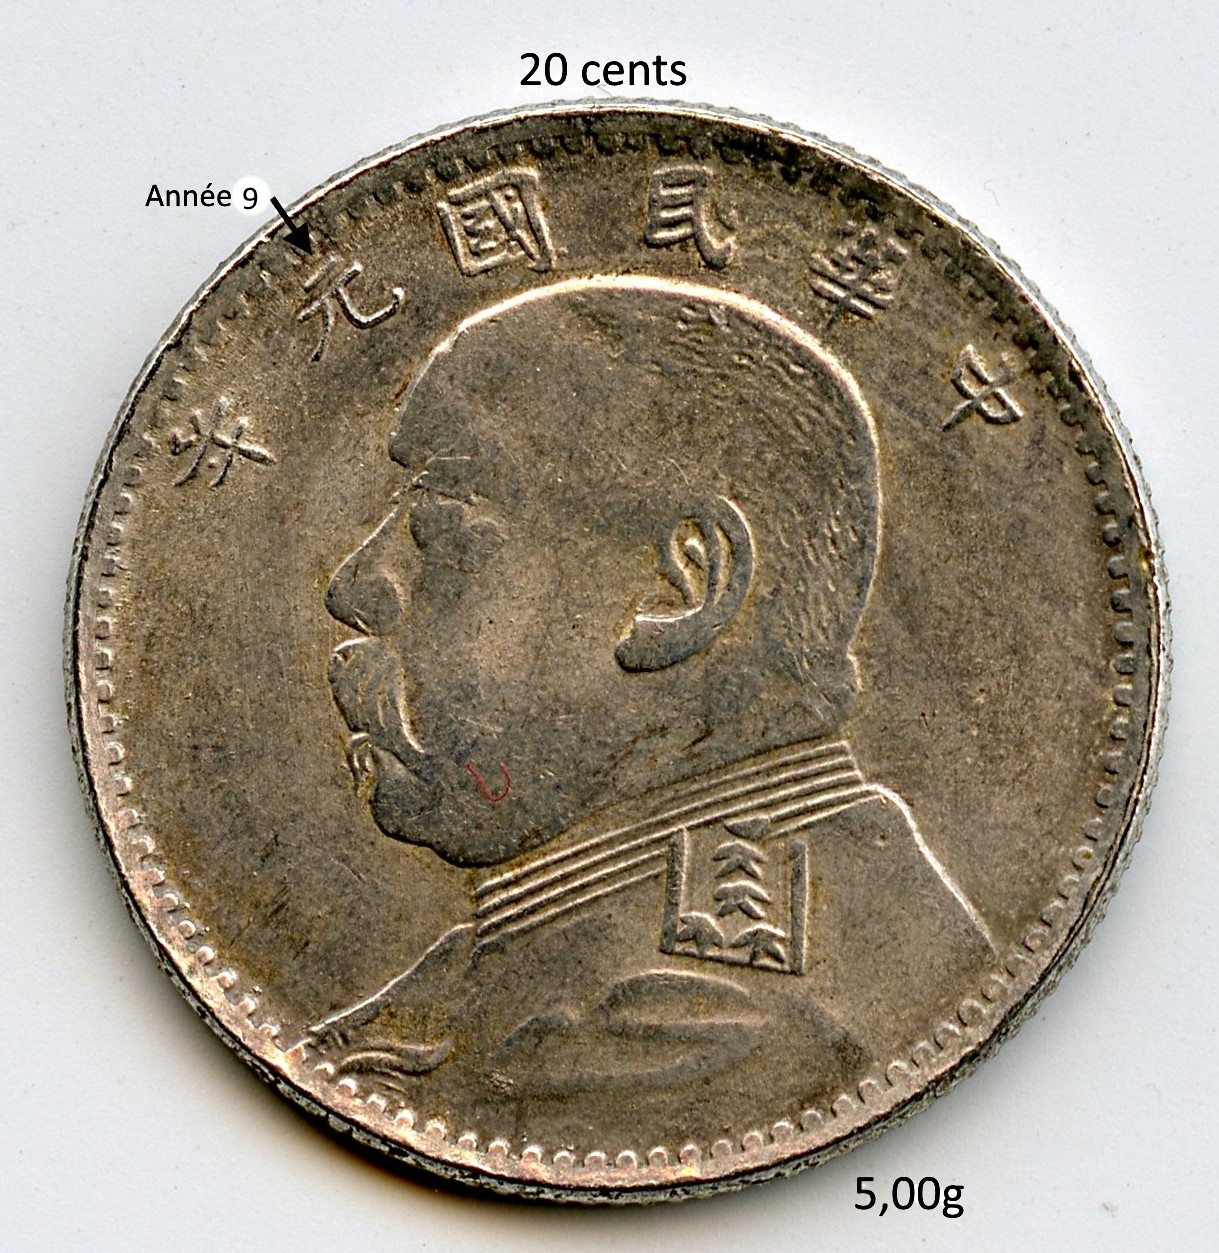 Chine 20 cents 1920 avers001.jpg